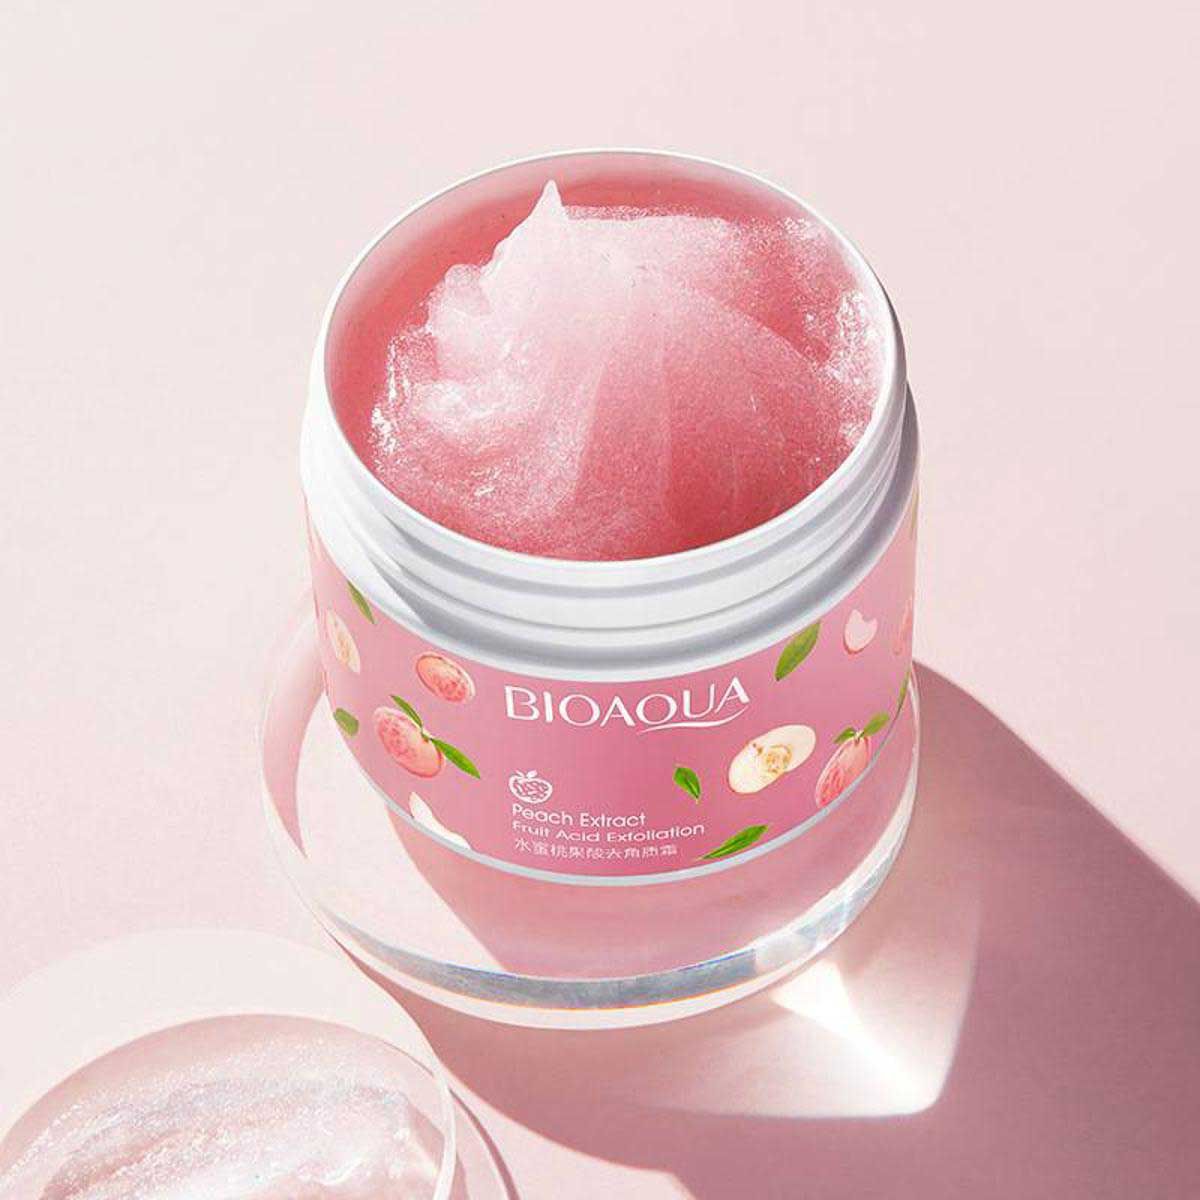 BIOAQUA Peach Exfoliating Face Cream: Gently Buff Away Dead Skin & Glow!